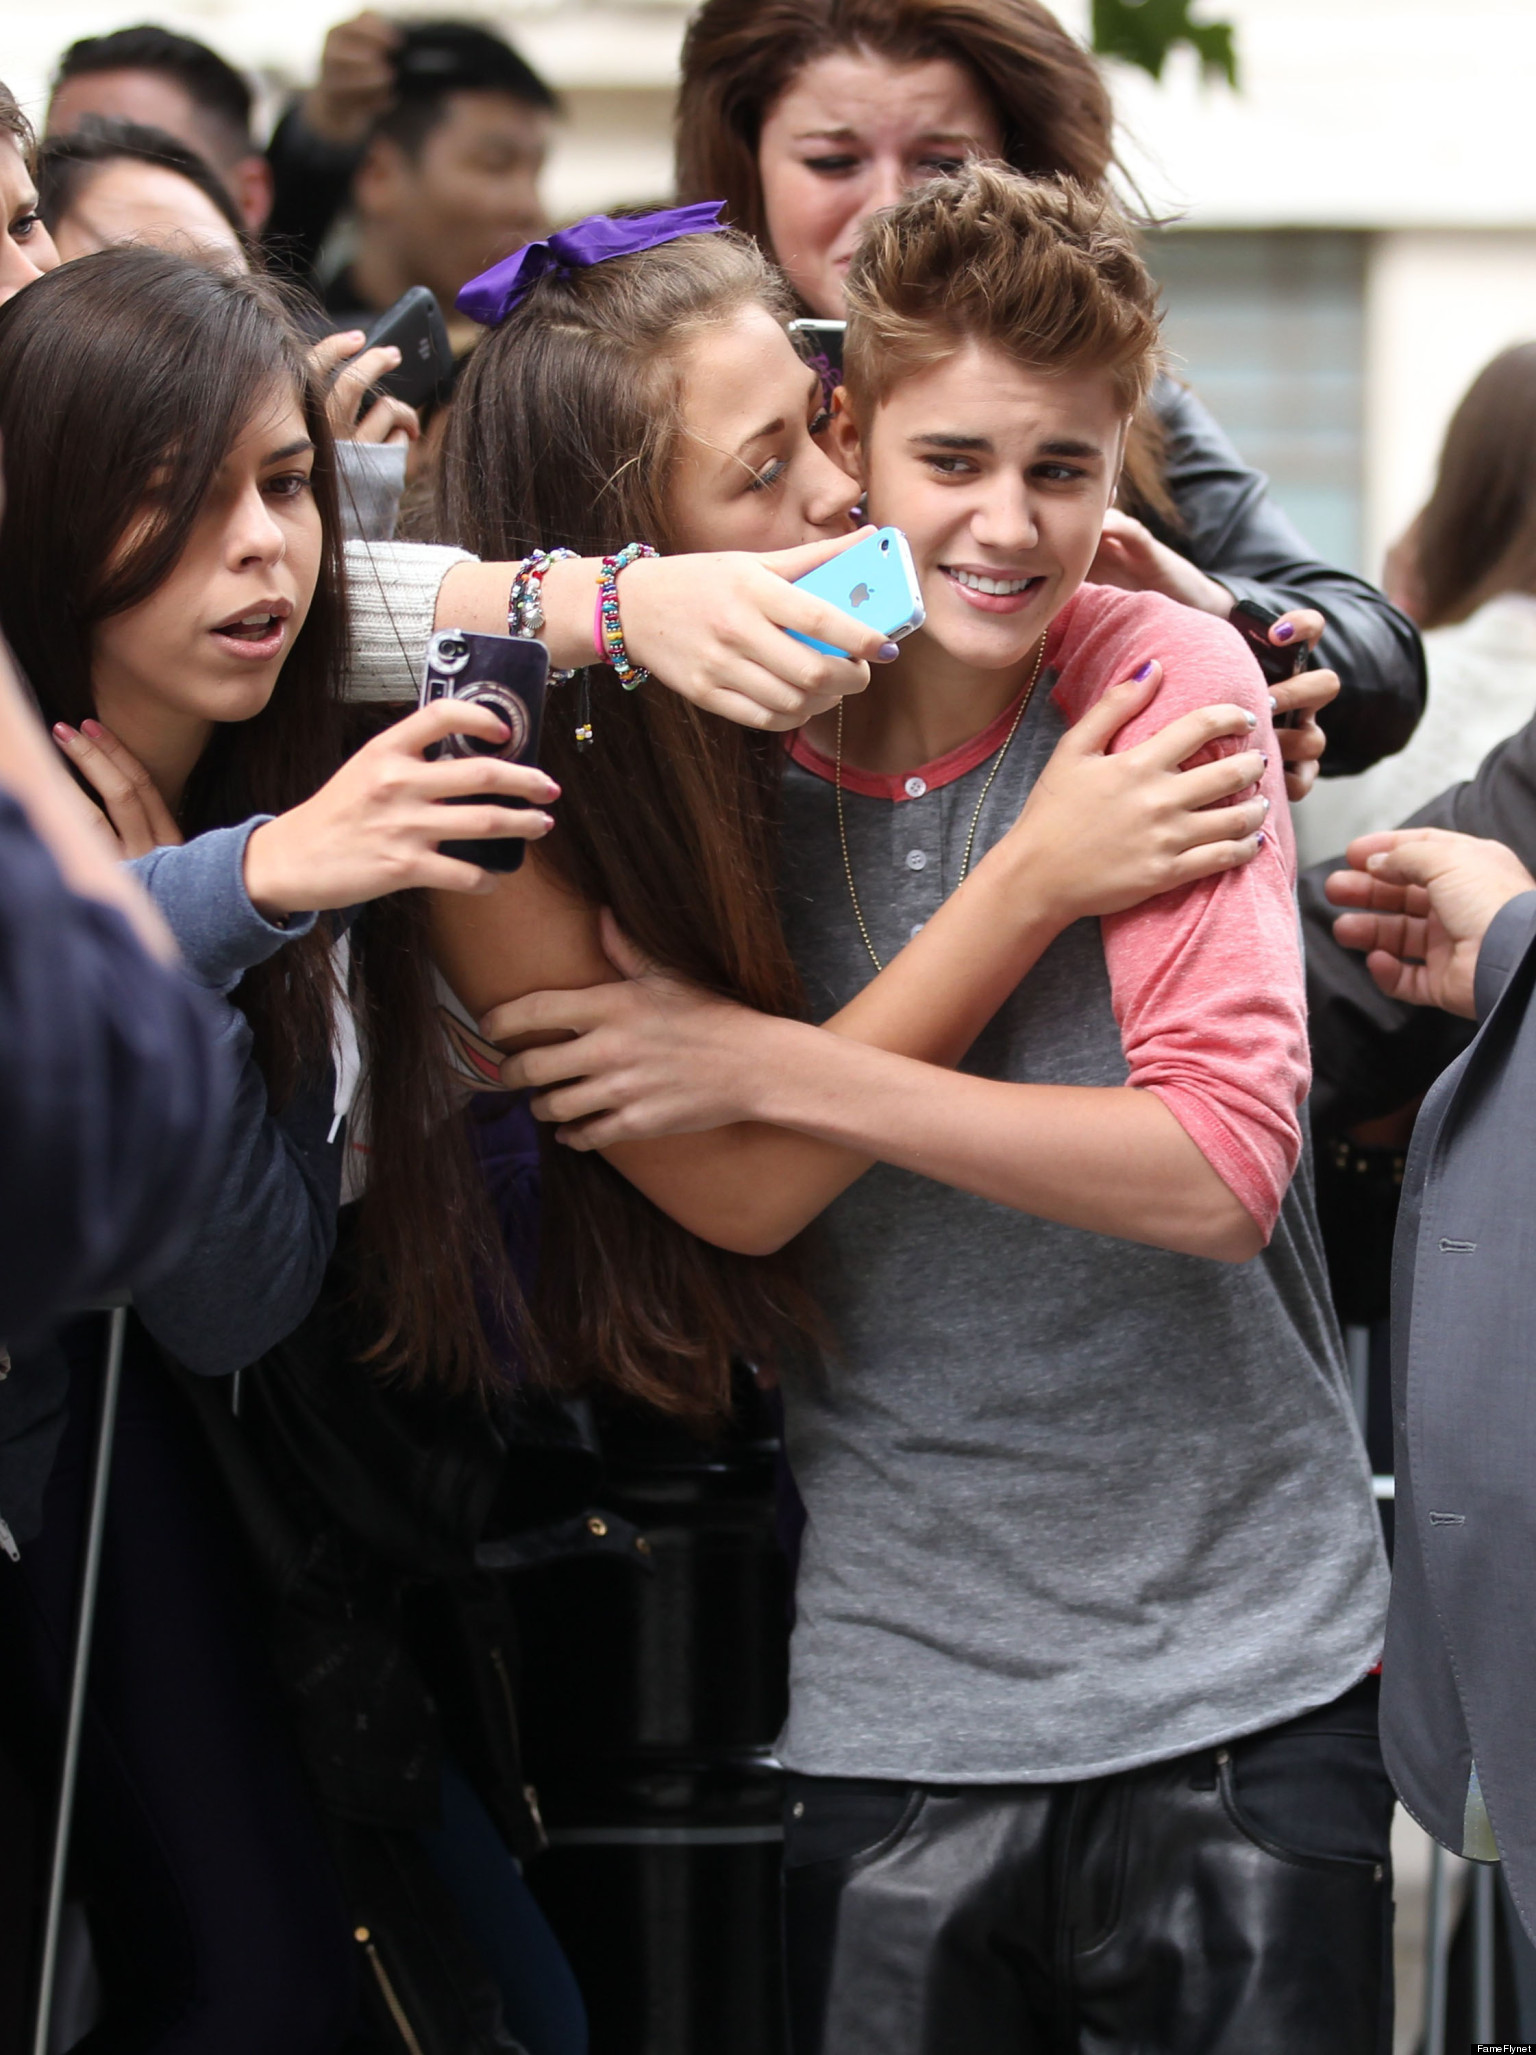 Justin Bieber Gets Unwanted Smooch From Zealous Fan (PHOTO) | HuffPost1536 x 2055